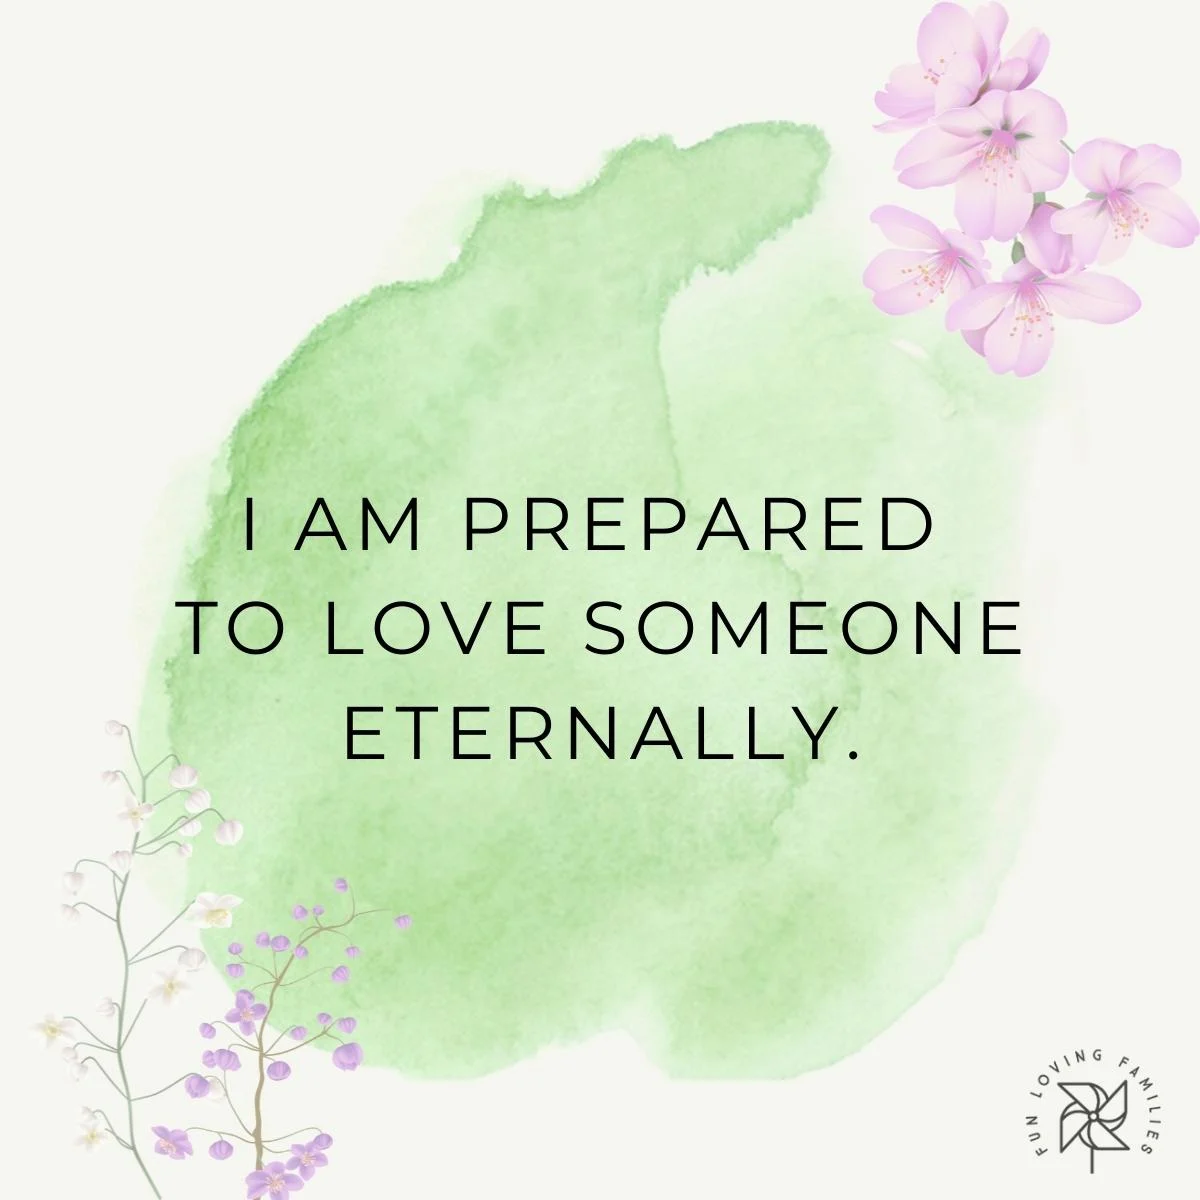 I am prepared to love someone eternally affirmation